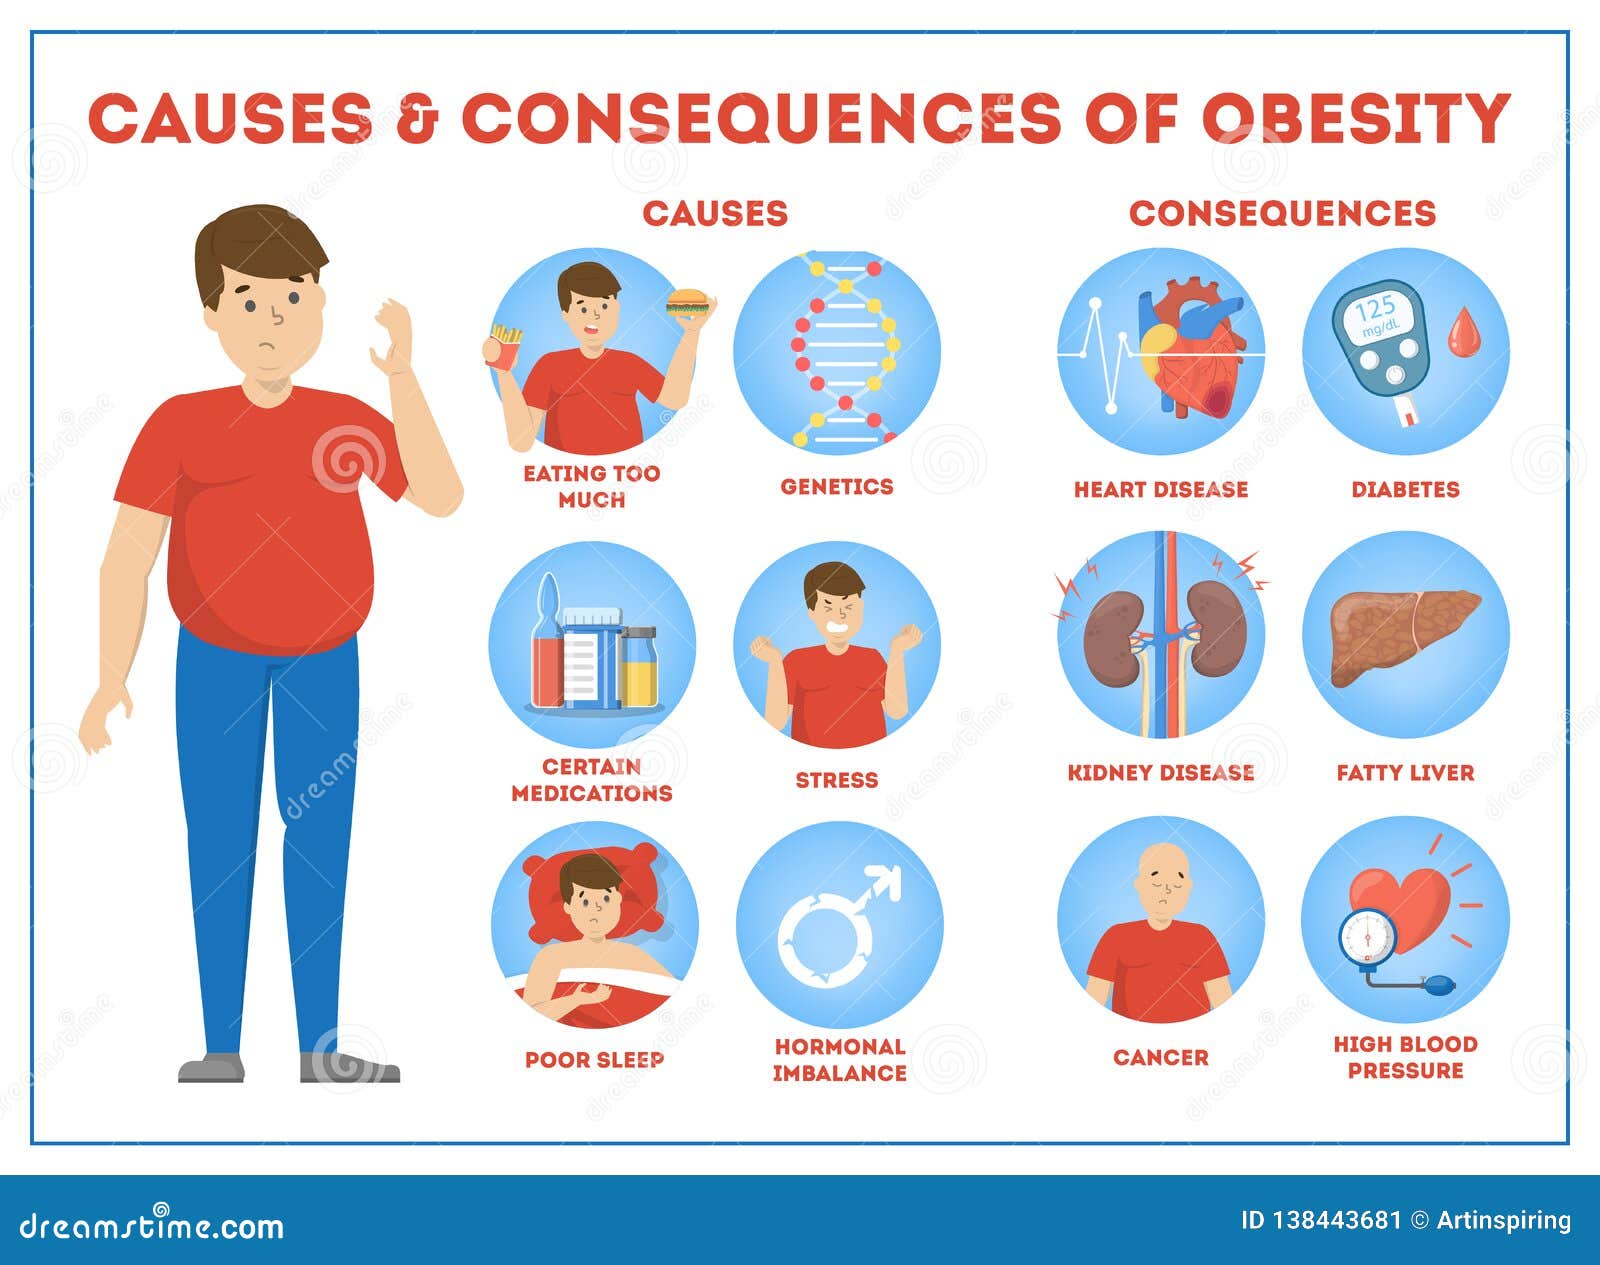 Consequences of obesity. Осложнения ожирения инфографика. Инфографика для людей с ожирением. Causes of obesity.